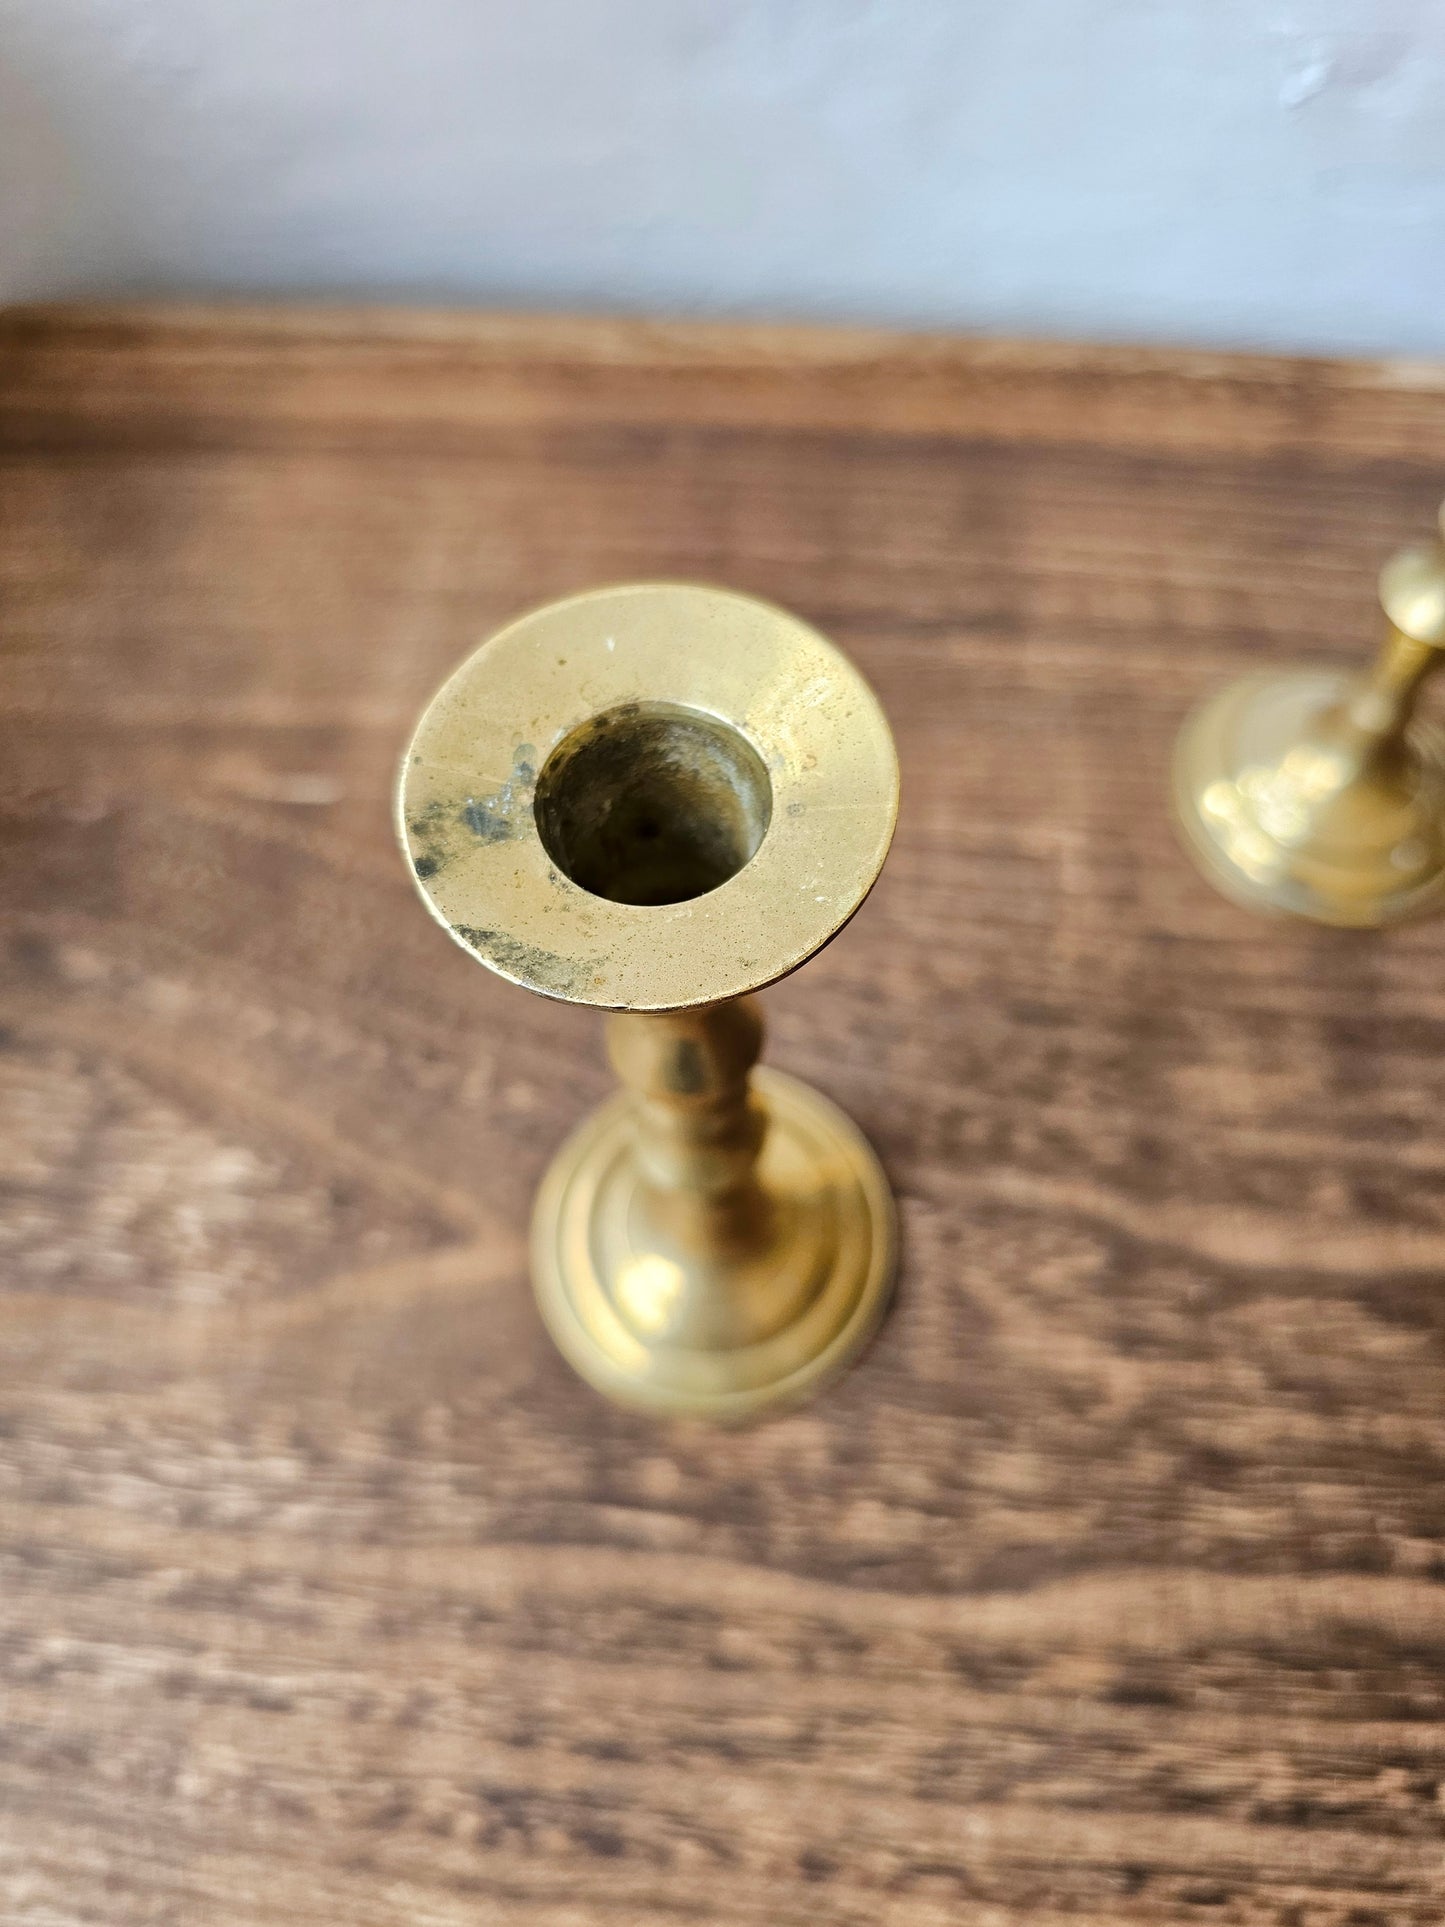 Vintage Brass Candle Holders | Skinny